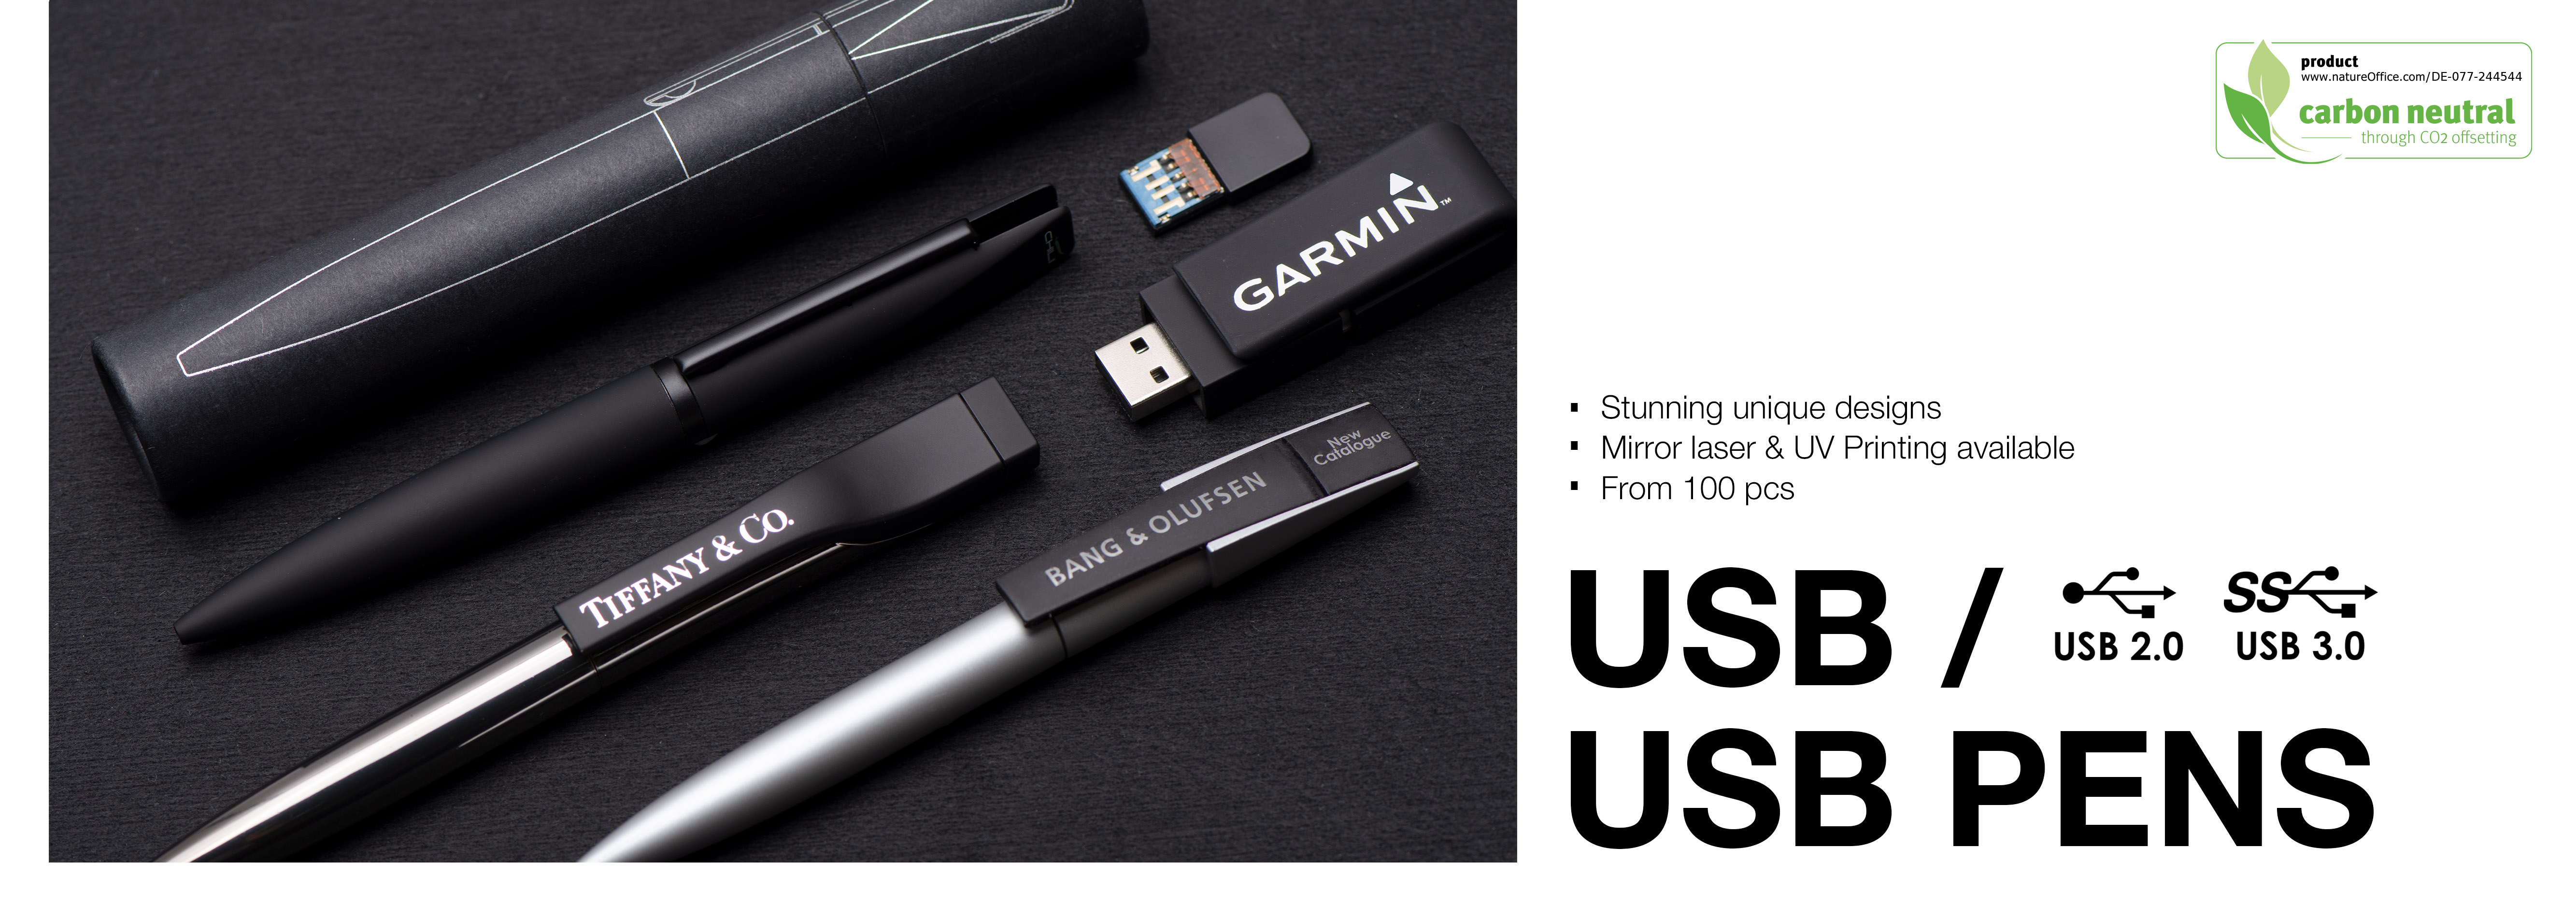 STOCK | USB & USB PENS